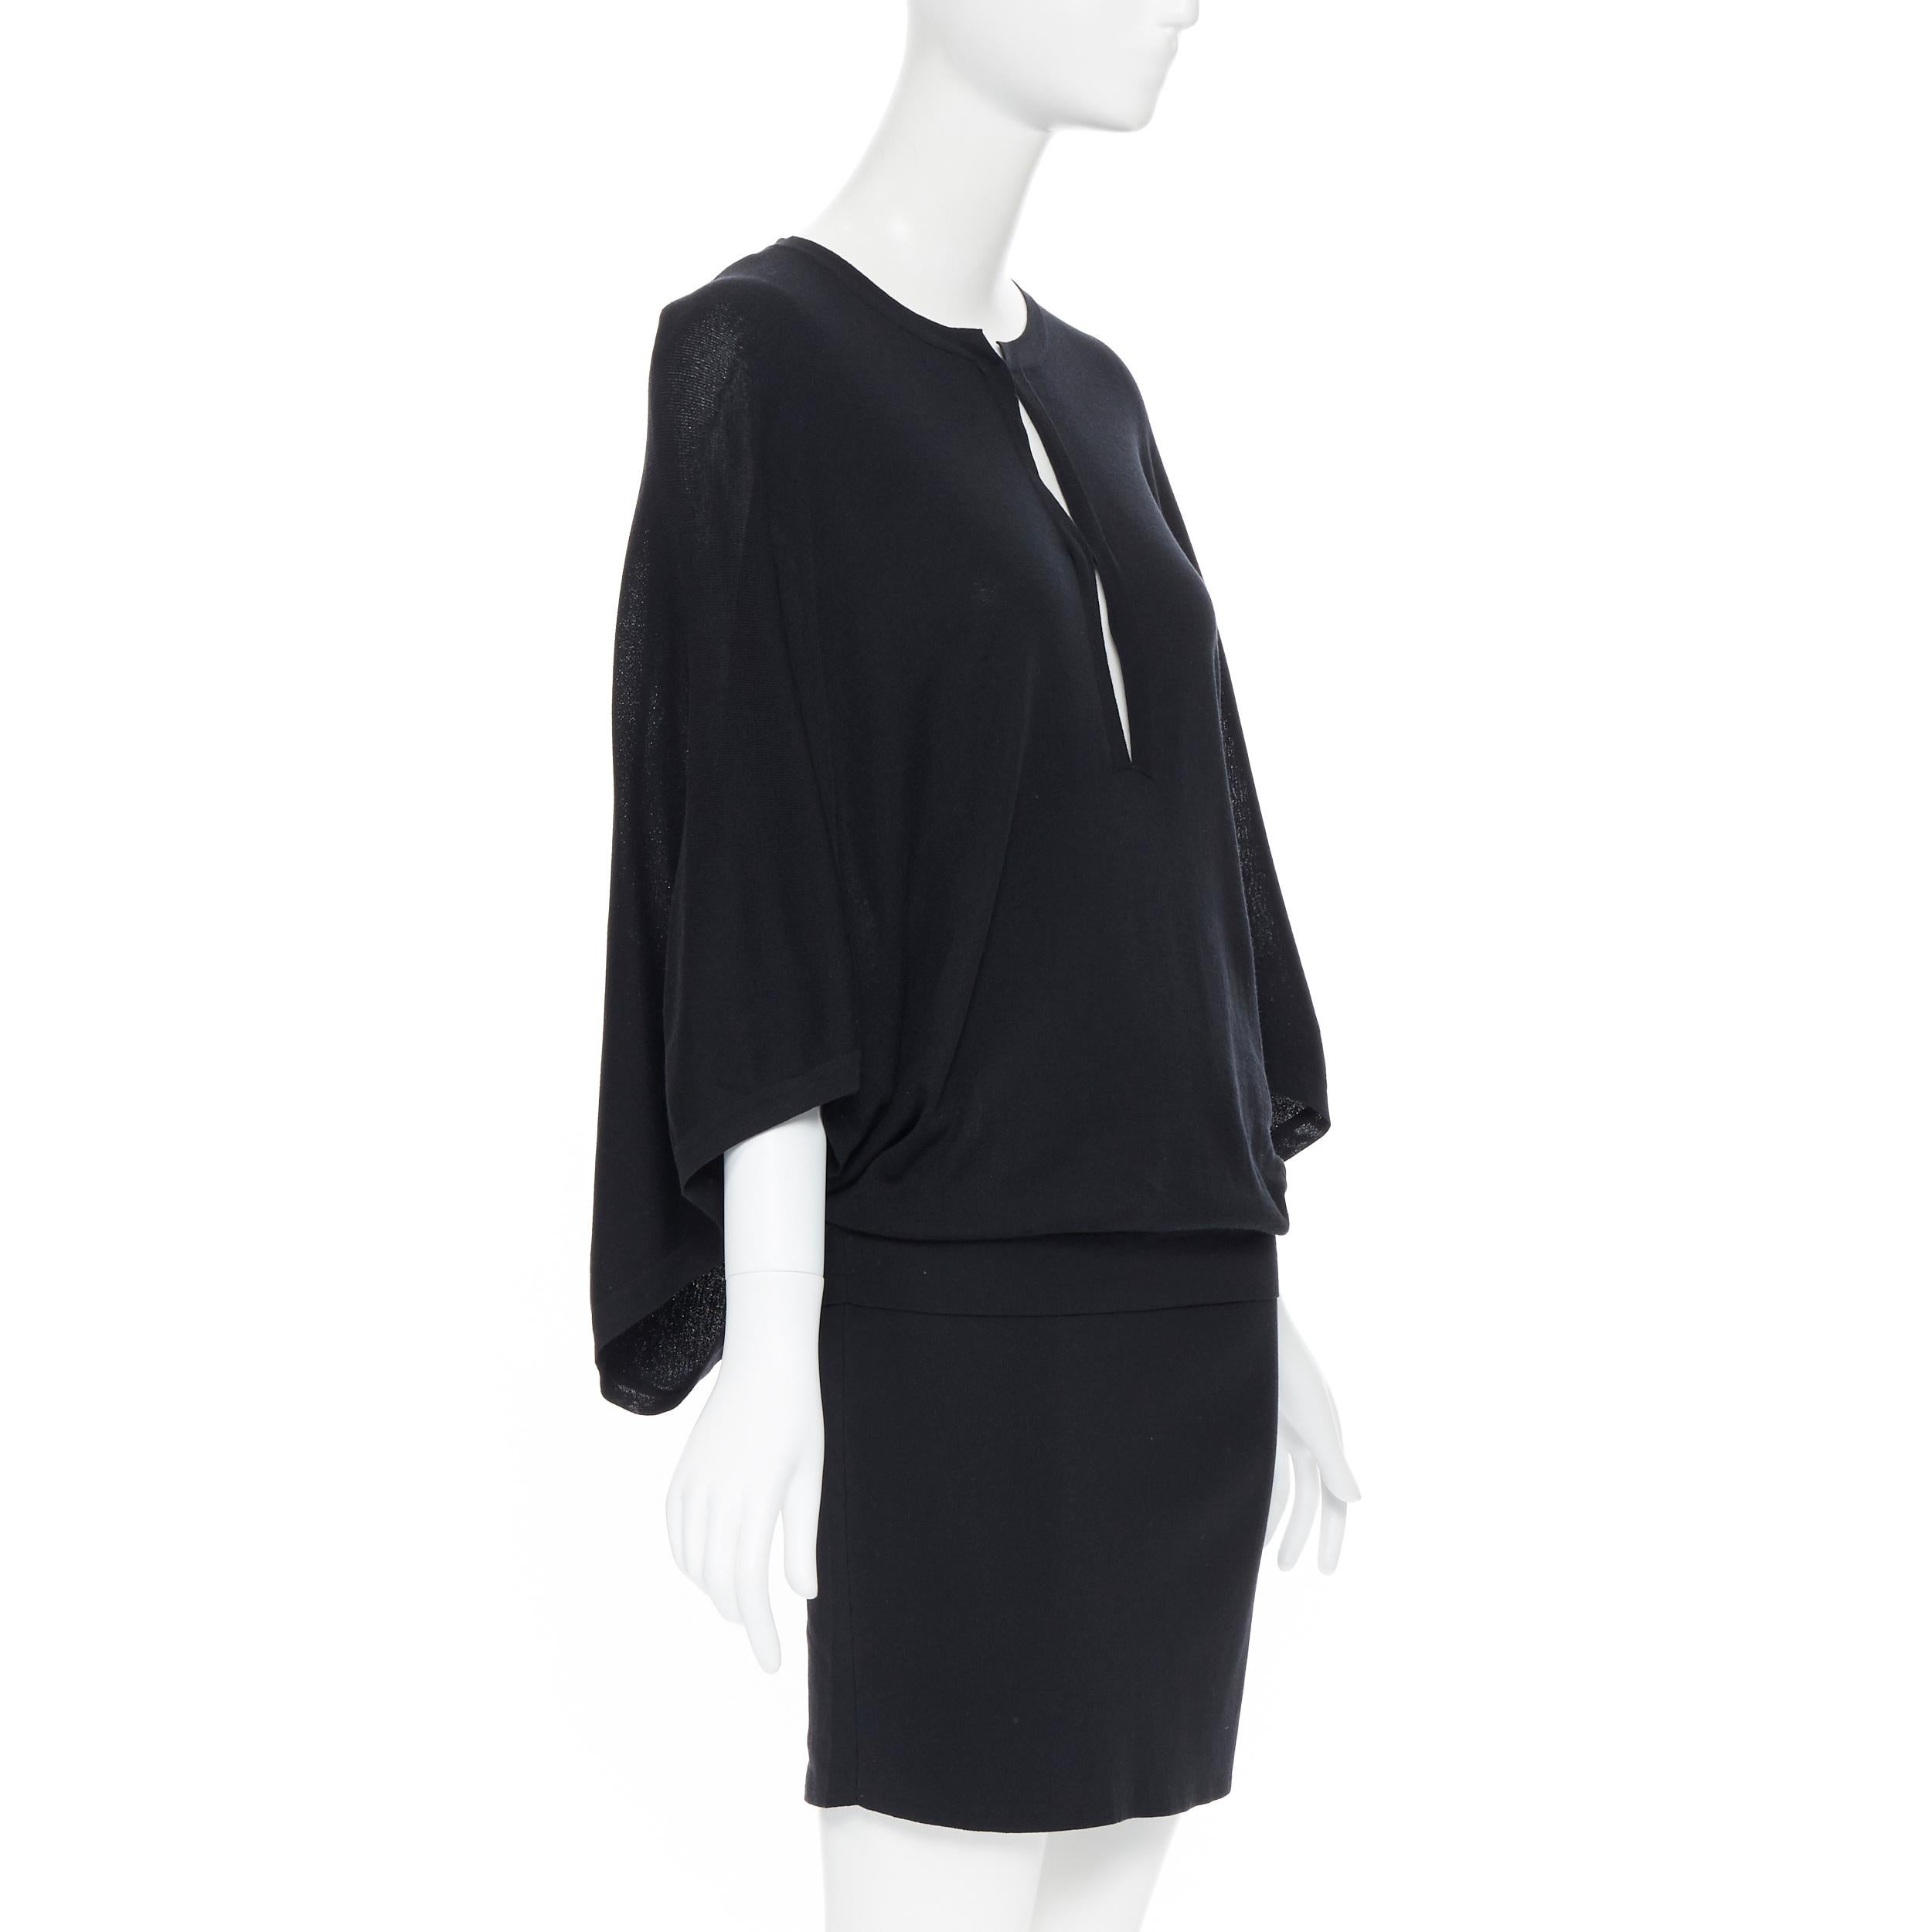 Black GUCCI 100% silk knitted kyehole front kimono batwing cape sleeve draped dress M